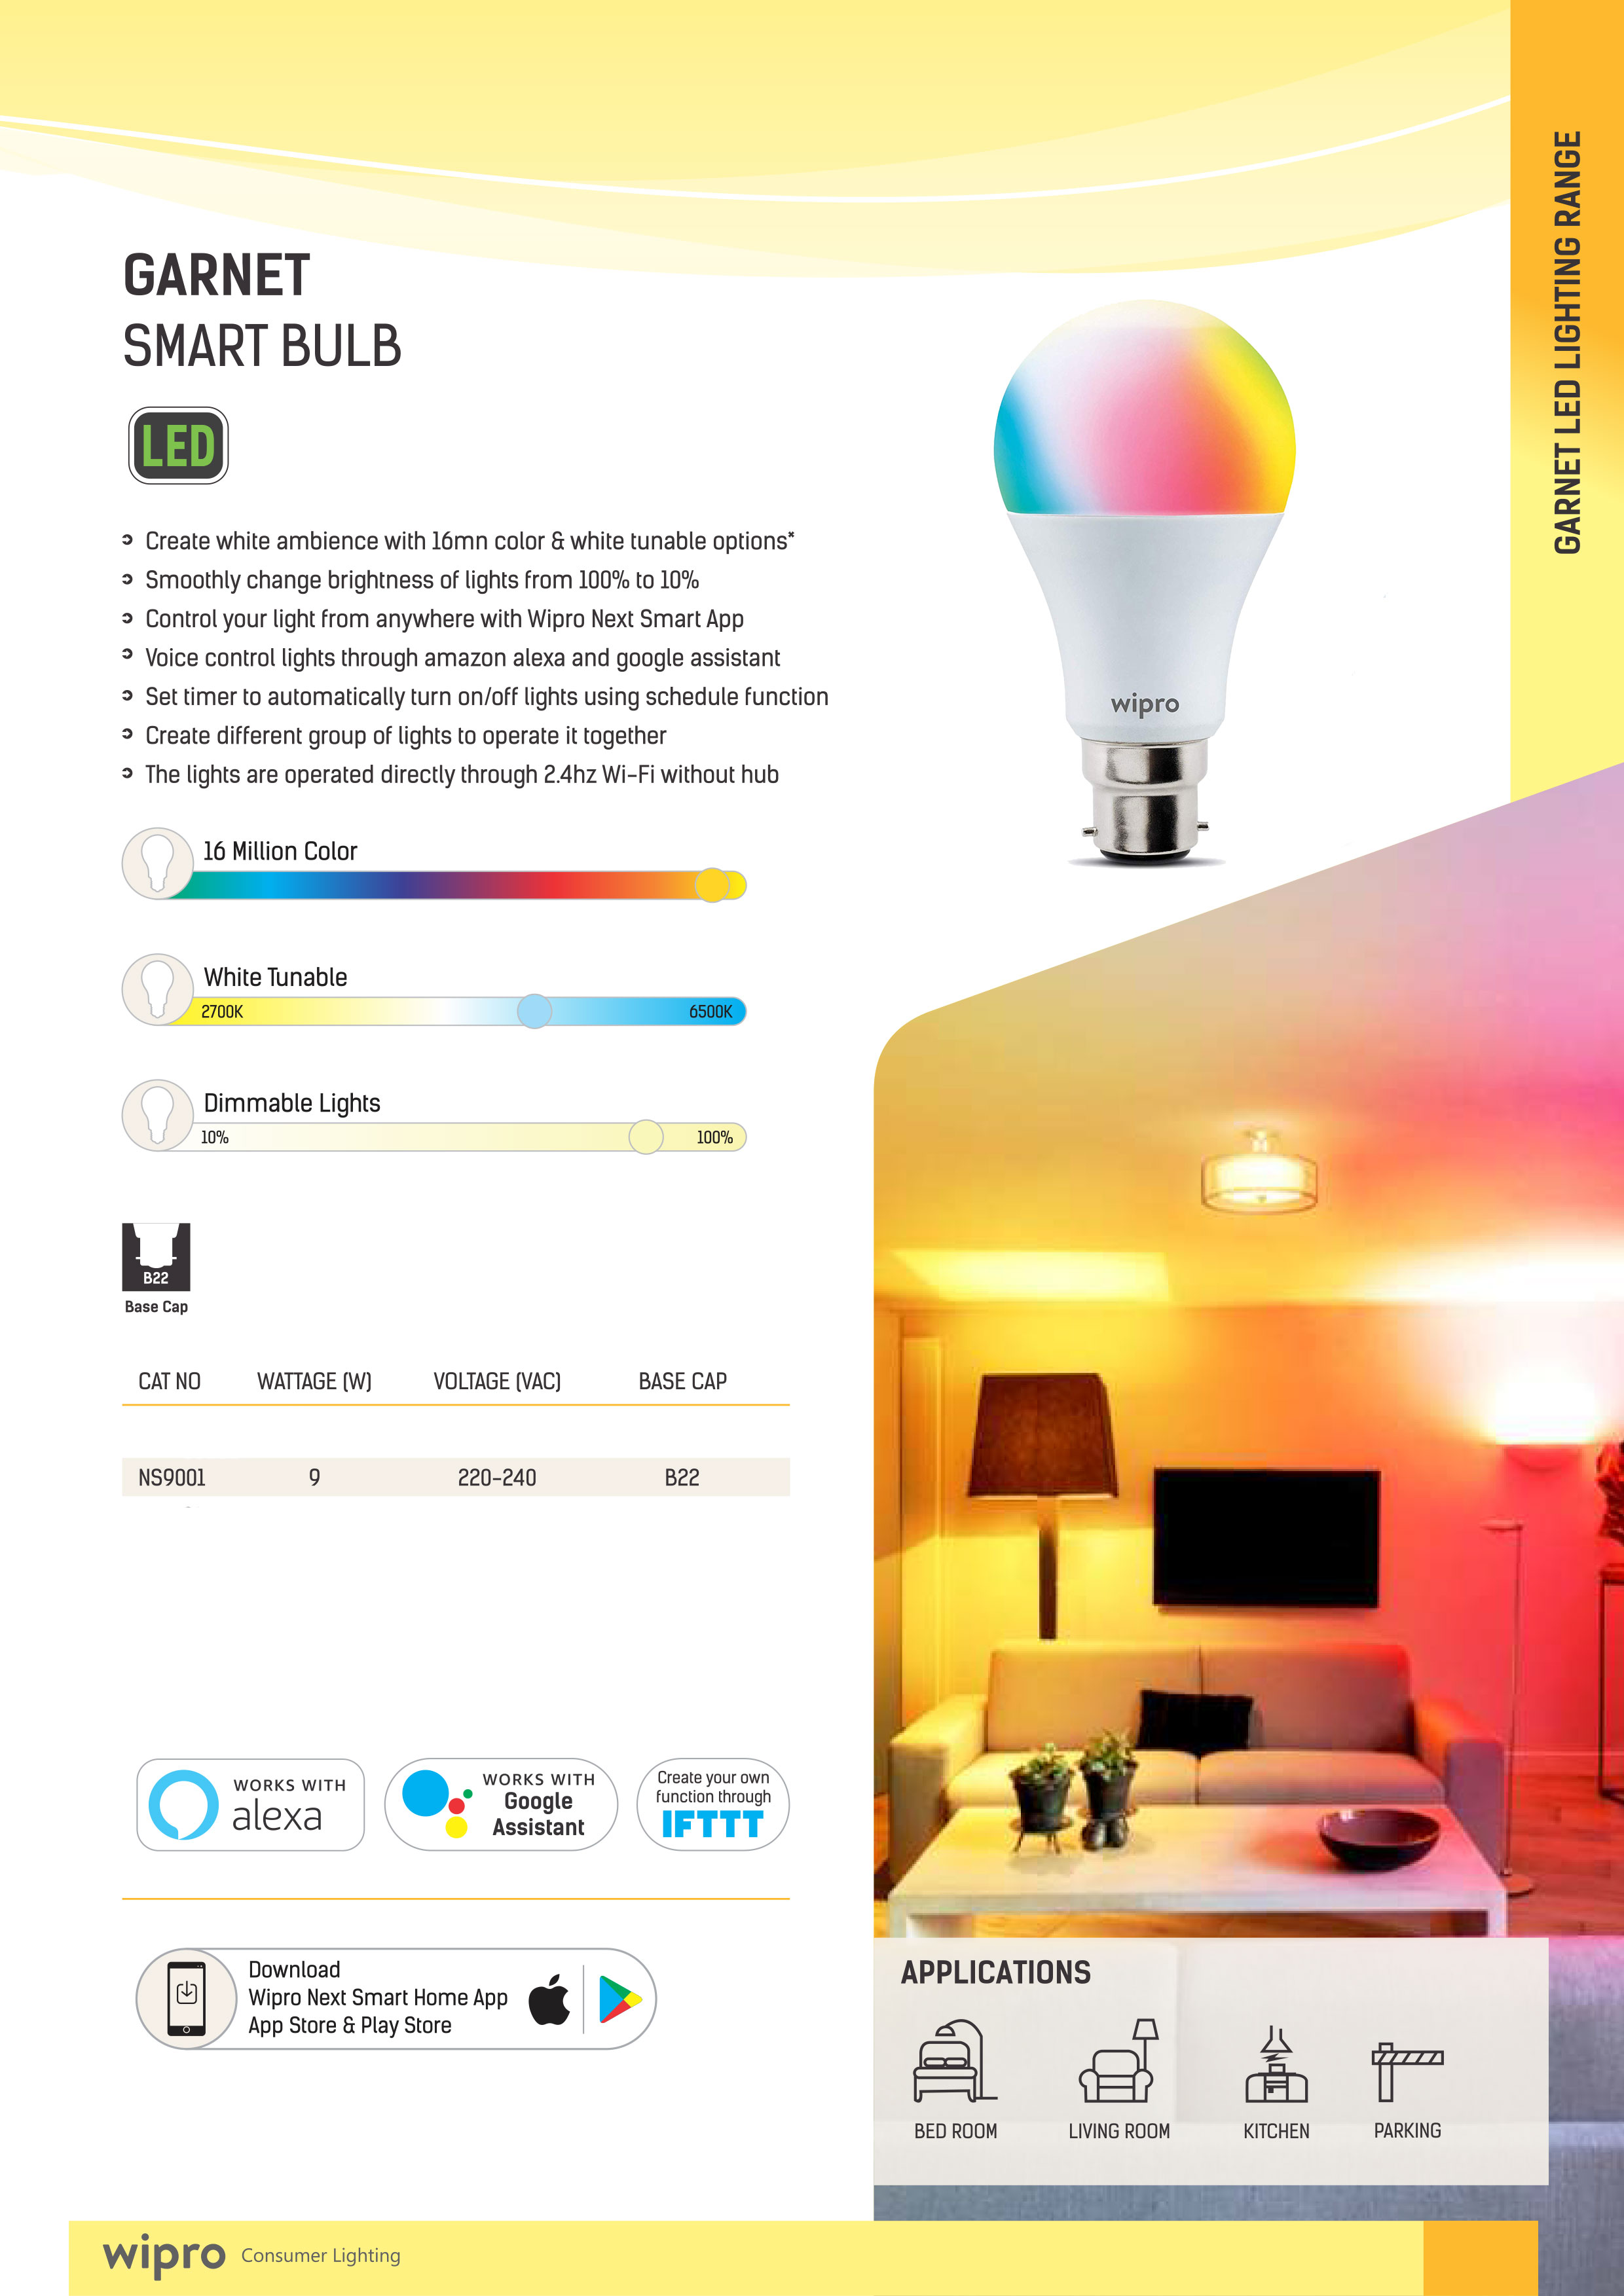 Wipro Garnet RGB LED Bulb